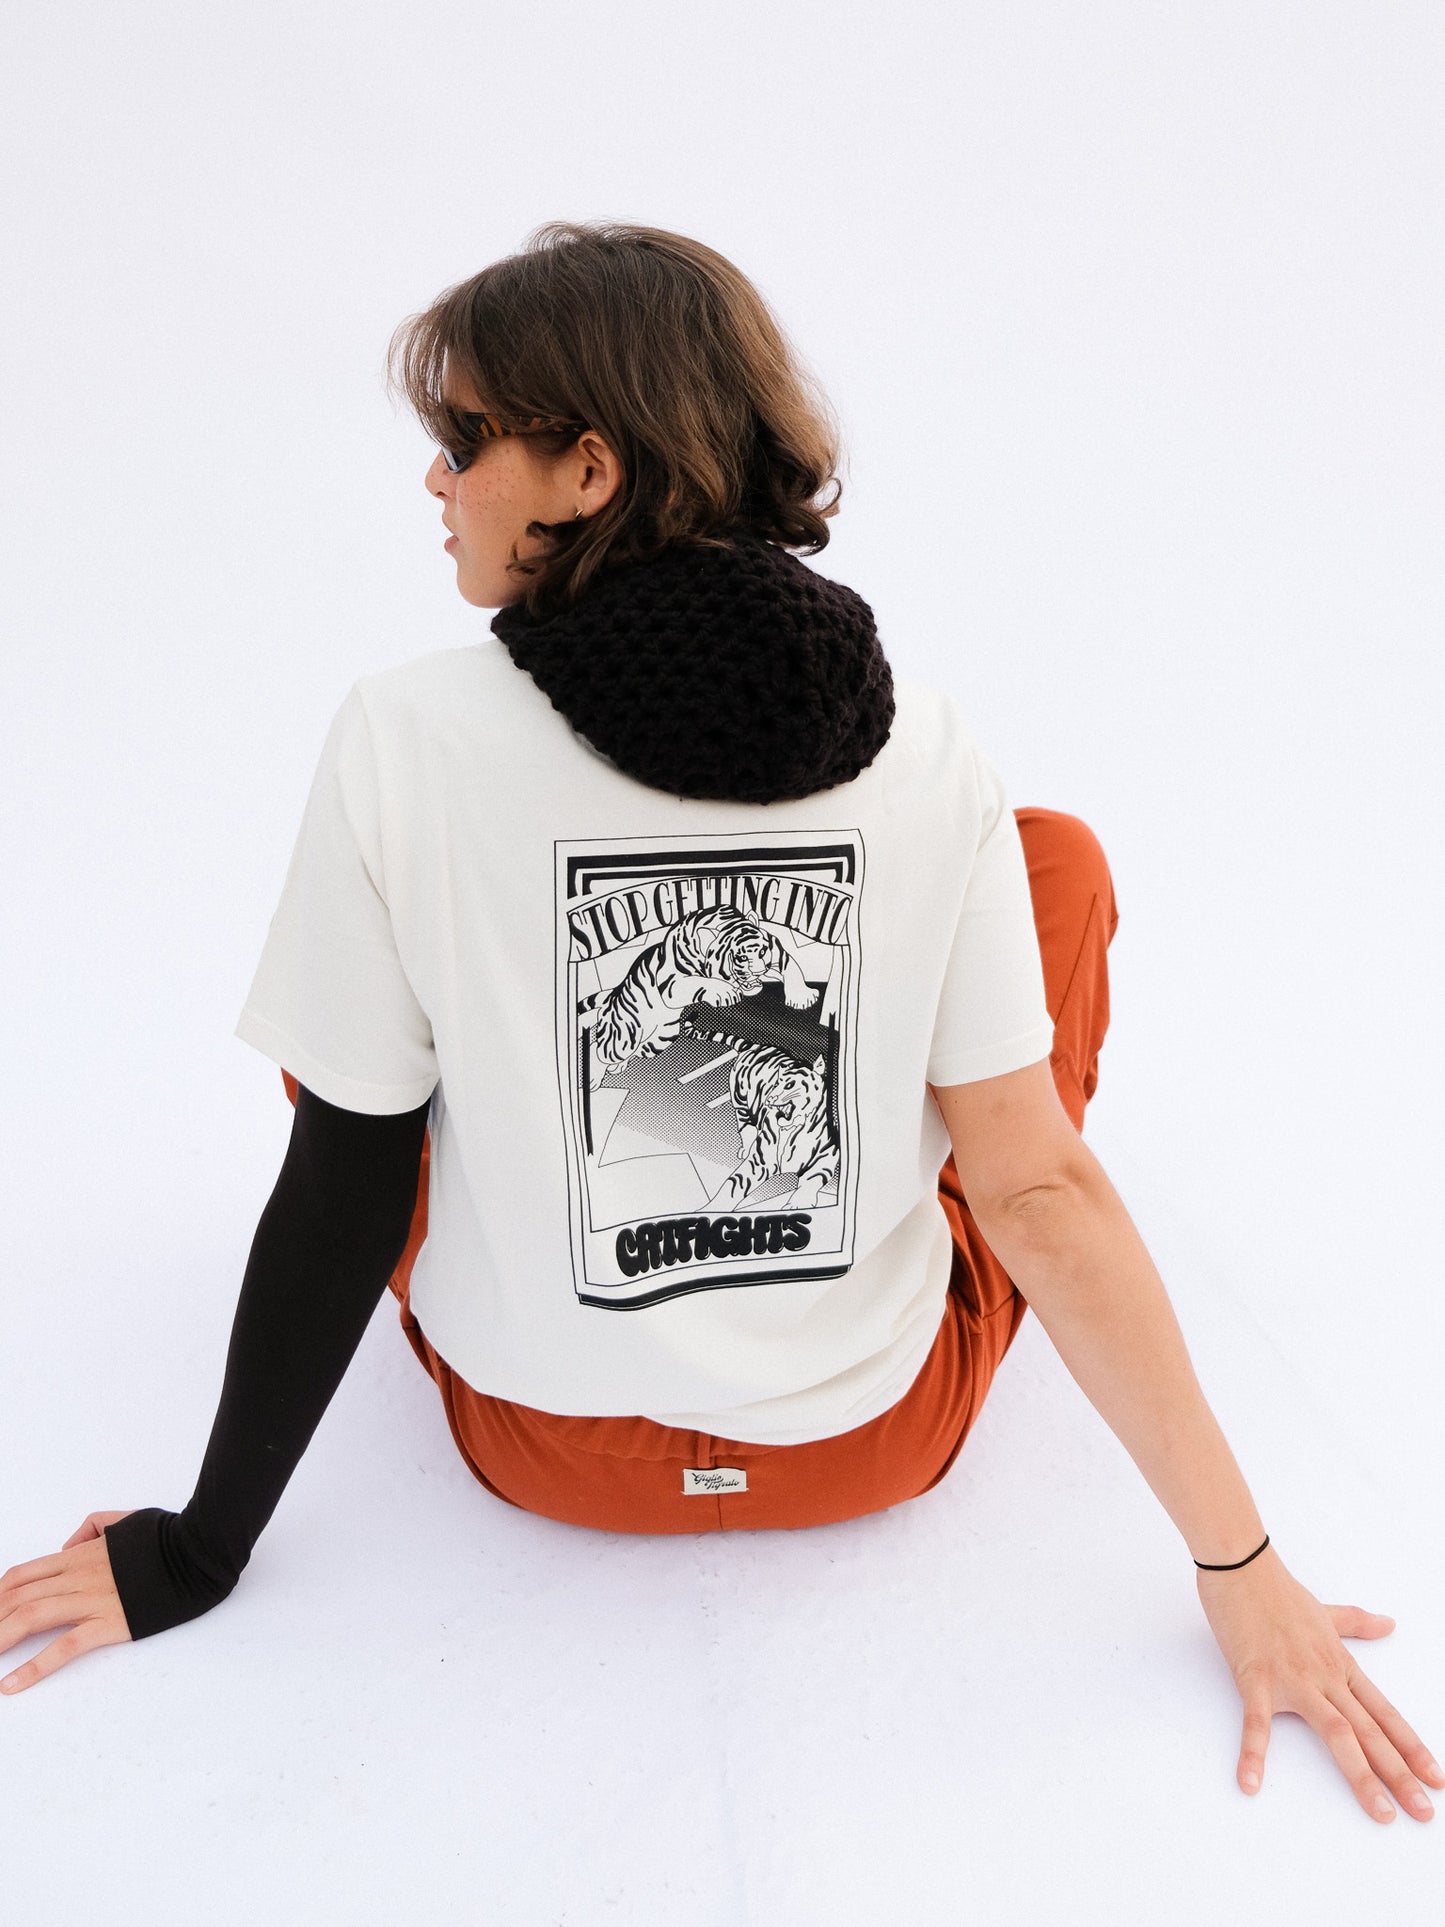 T-shirt, back view, unisex, tiger print